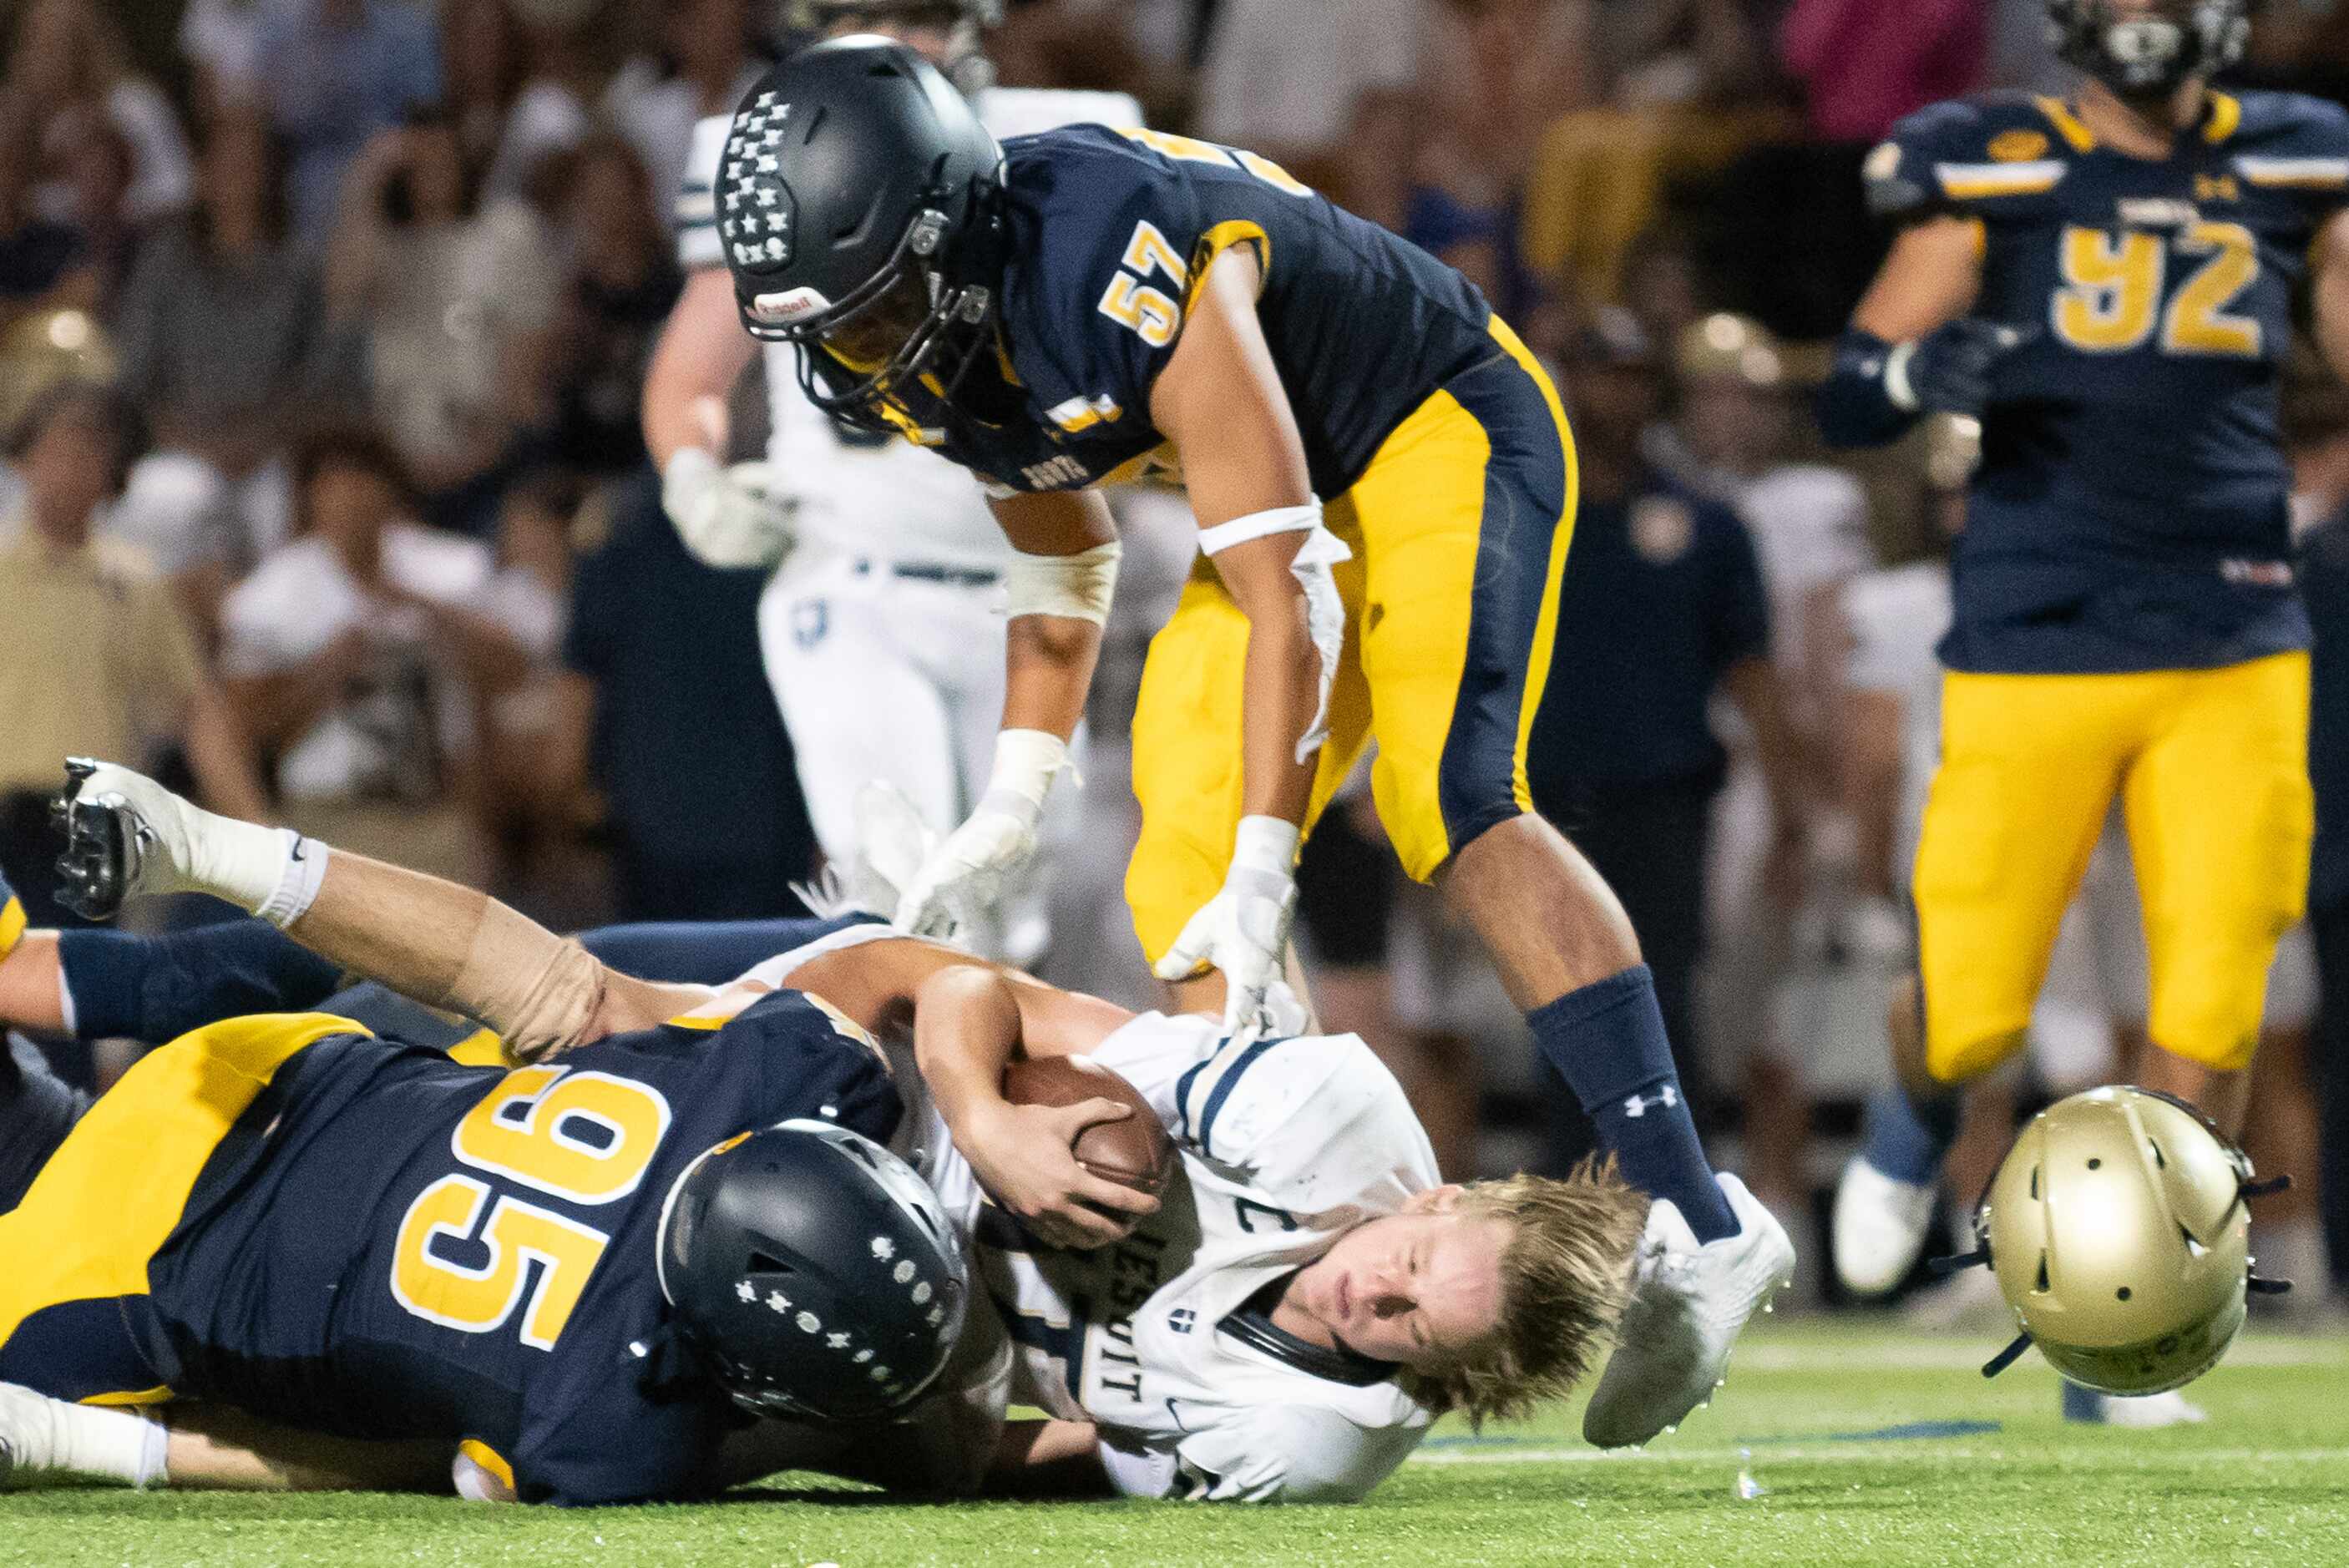 Jesuit senior quarterback Charlie Schmidt (17) loses his helmet as he's tackled after a run...